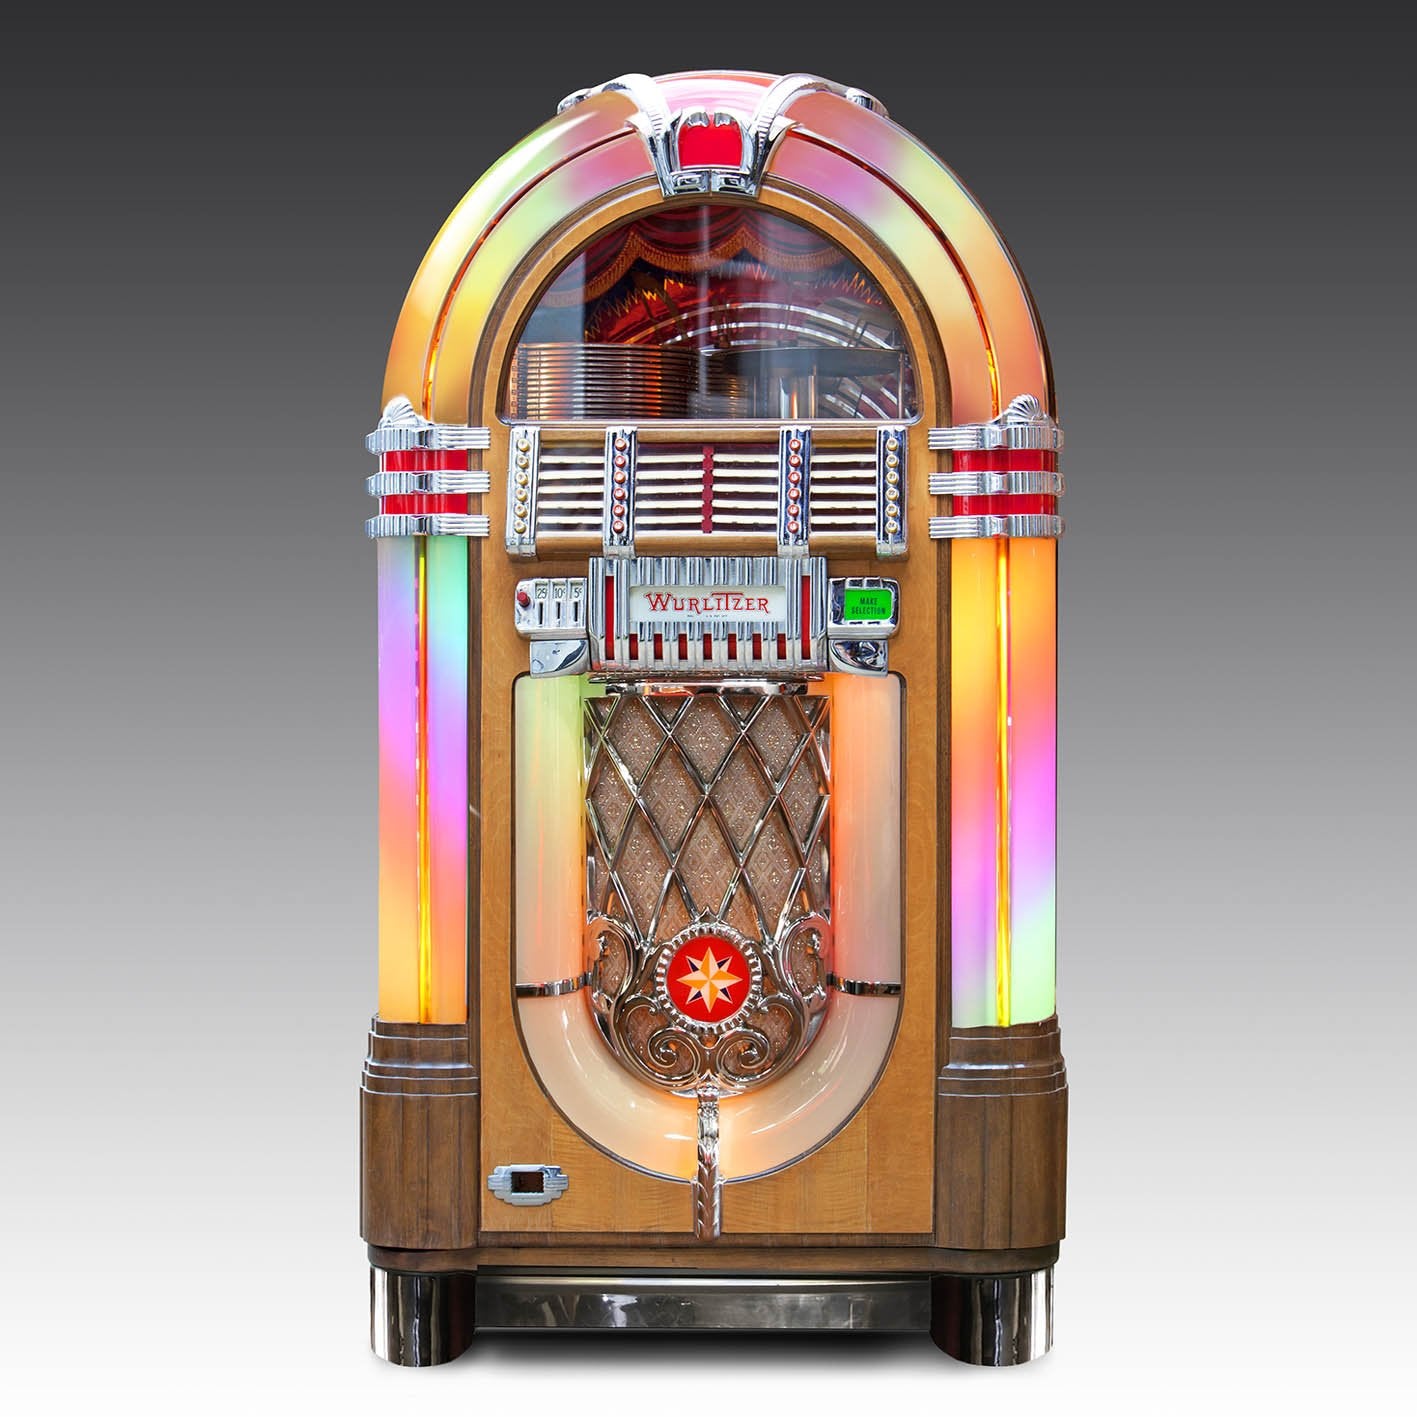 1940s Wurlitzer vinyl jukebox | The Games Room Company